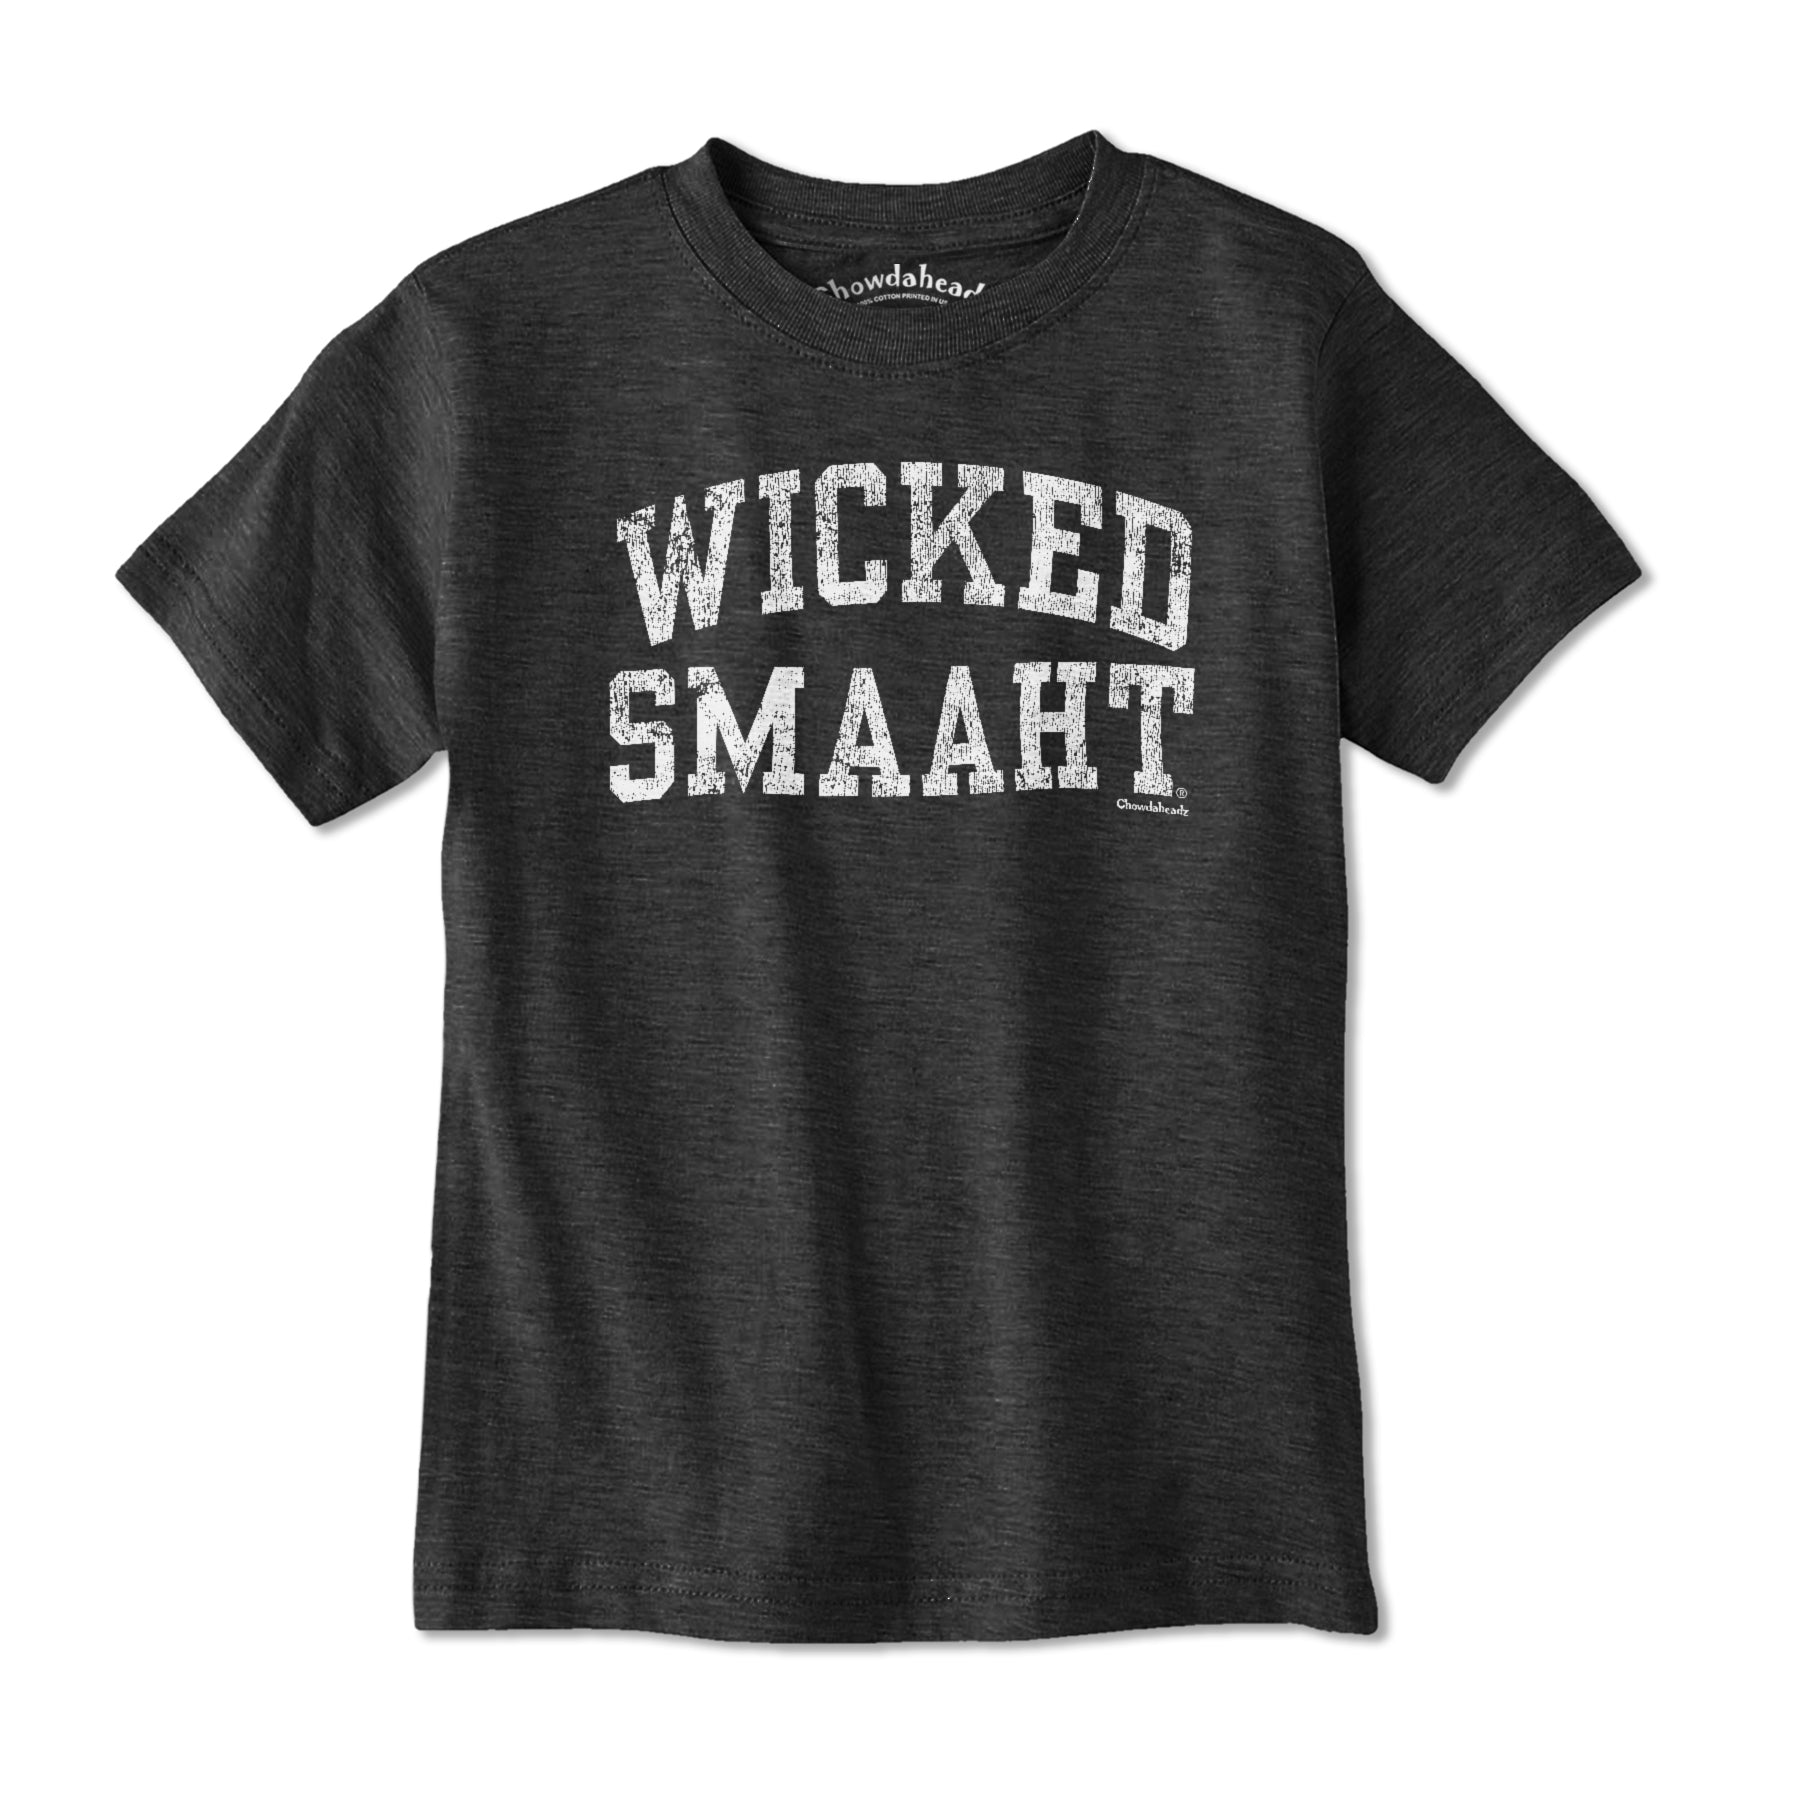 Wicked Smaaht Youth T-Shirt - Chowdaheadz